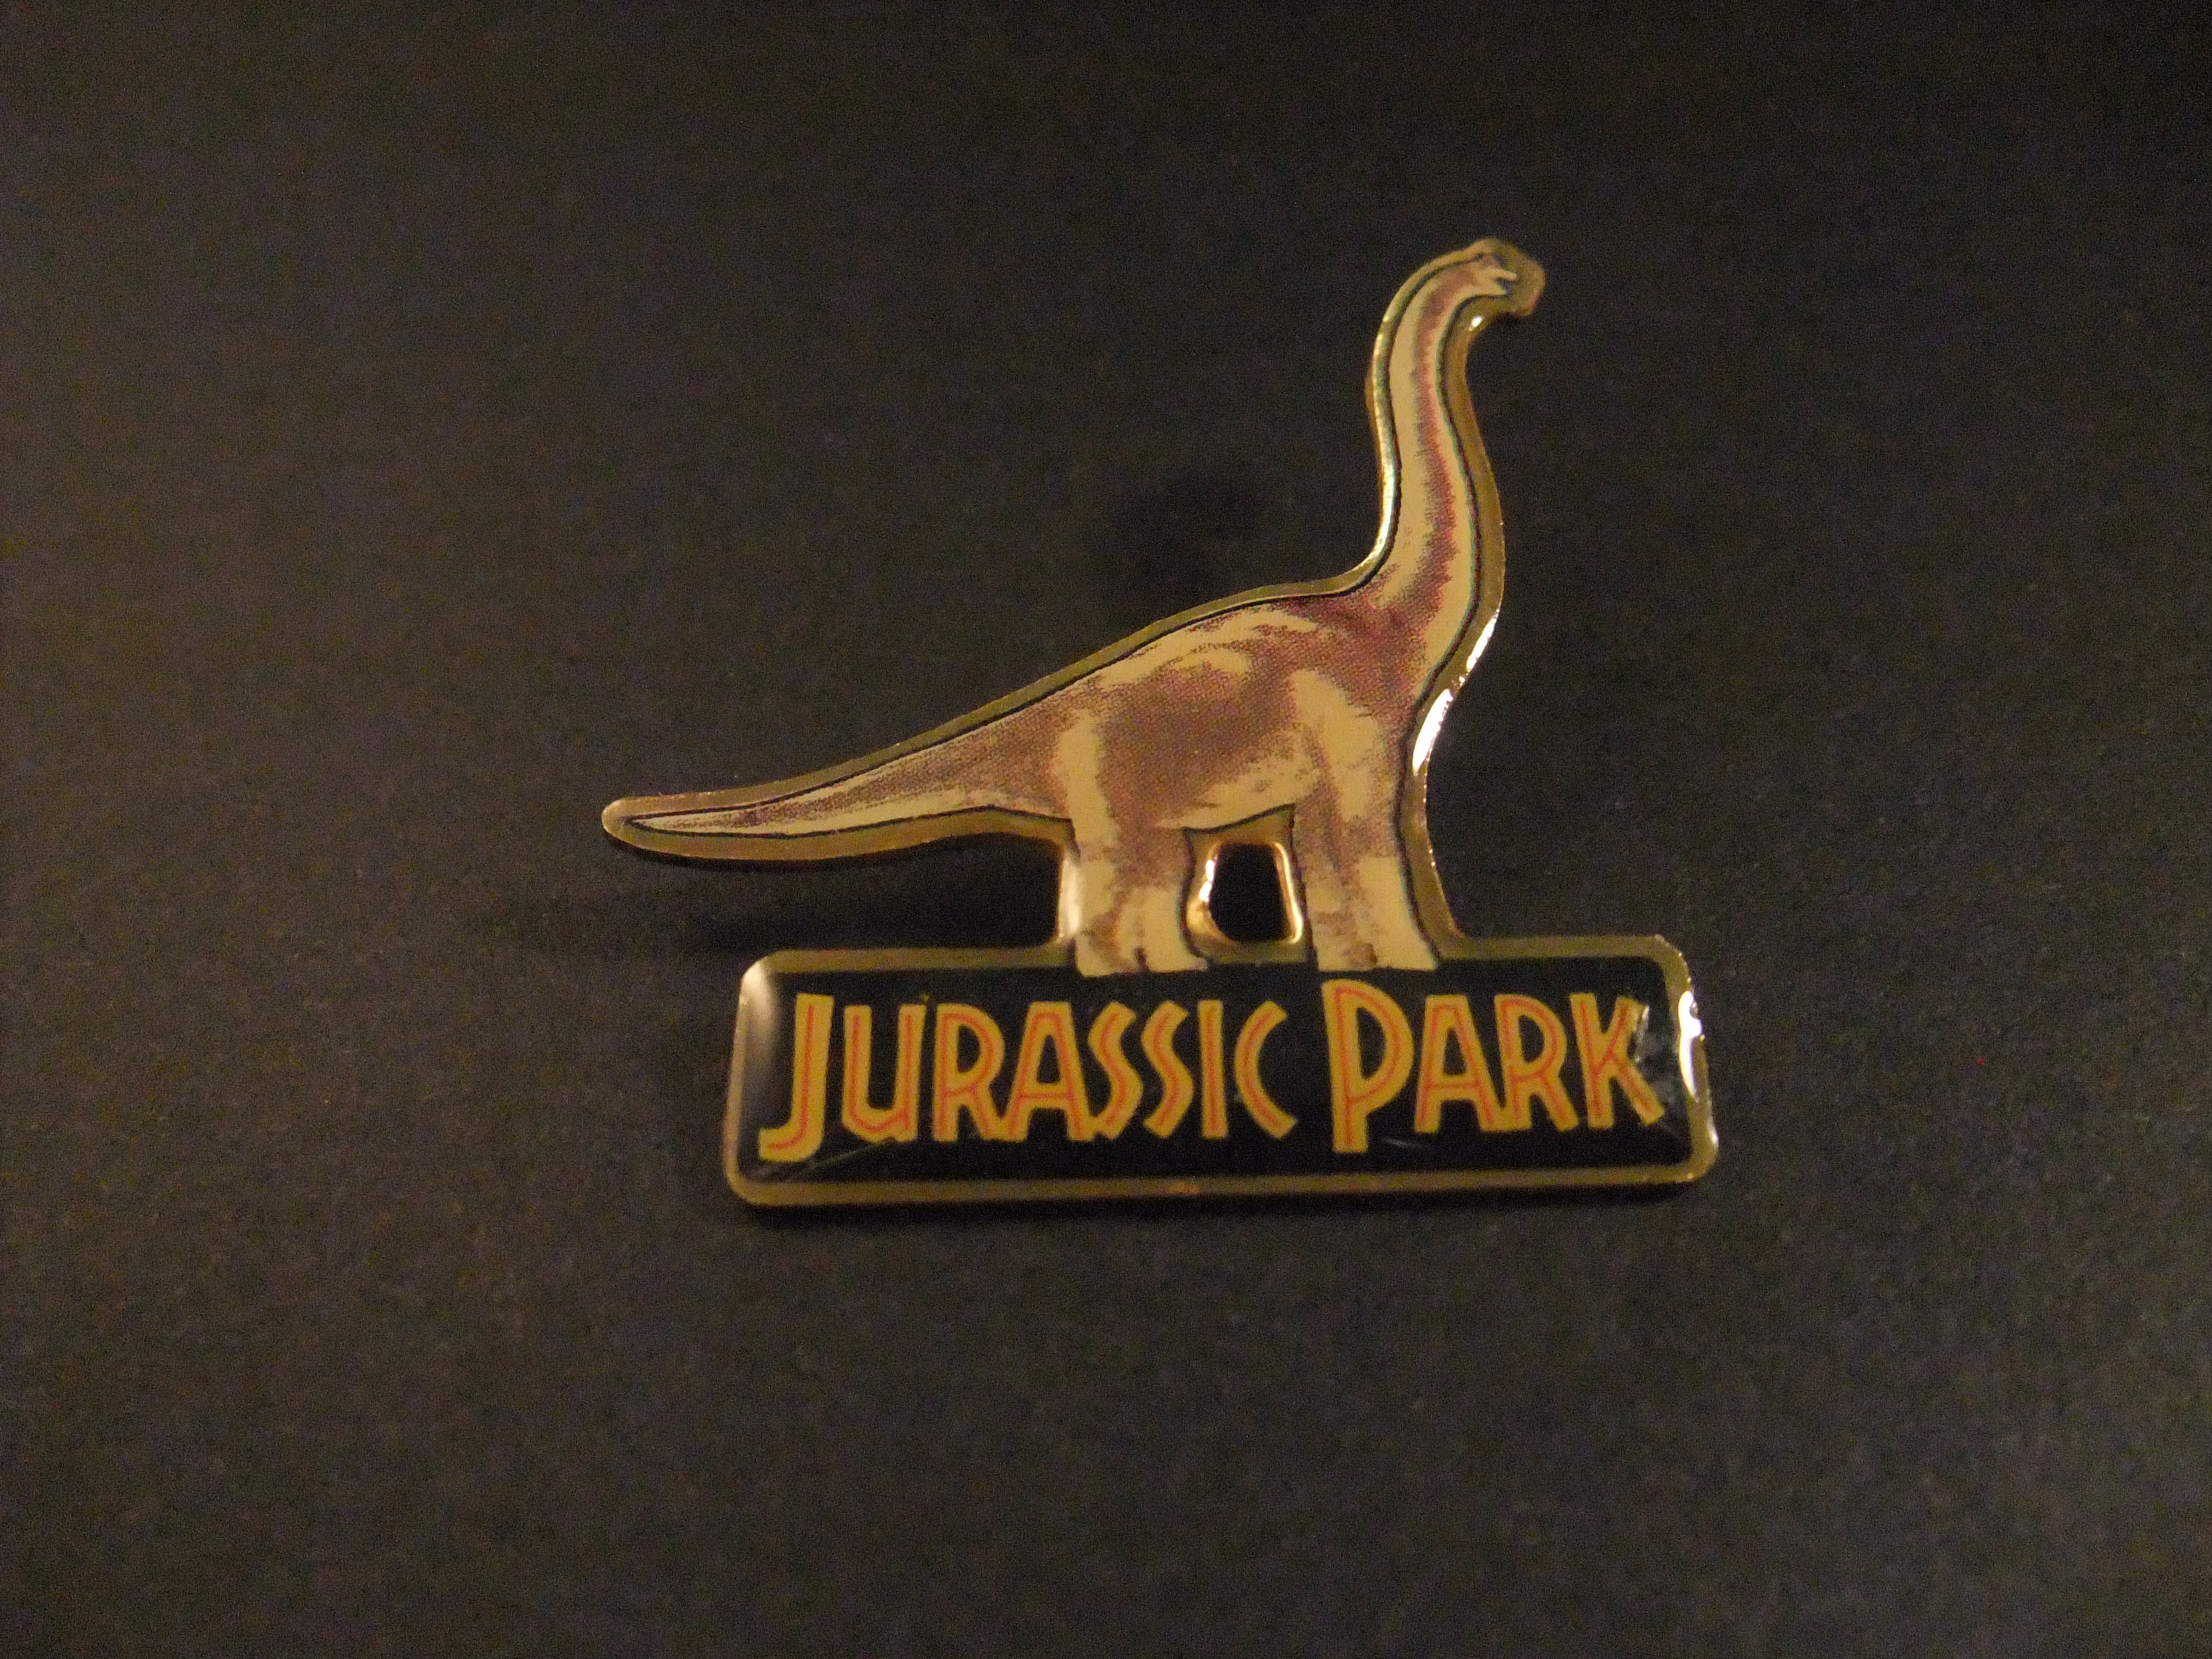 Jurassic Park( Amerikaanse film van Steven Spielberg)Tsintaosaurus